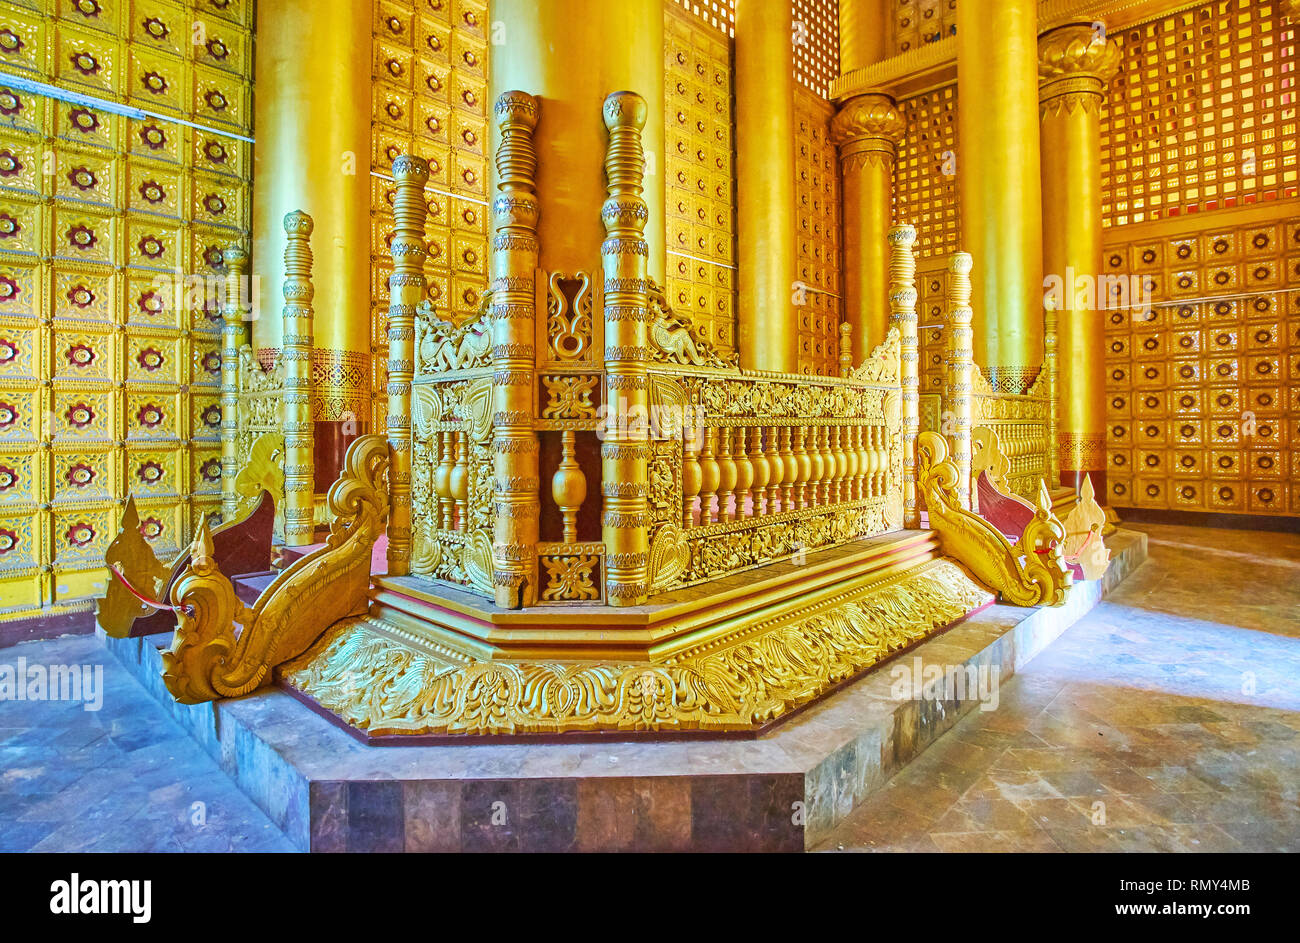 BAGO, MYANMAR - FEBRUARY 15, 2018: Explore amazing interior of Bee (Bhammayarthana) Throne Hall of Kanbawzathadi palace with fine wooden carvings, pat Stock Photo